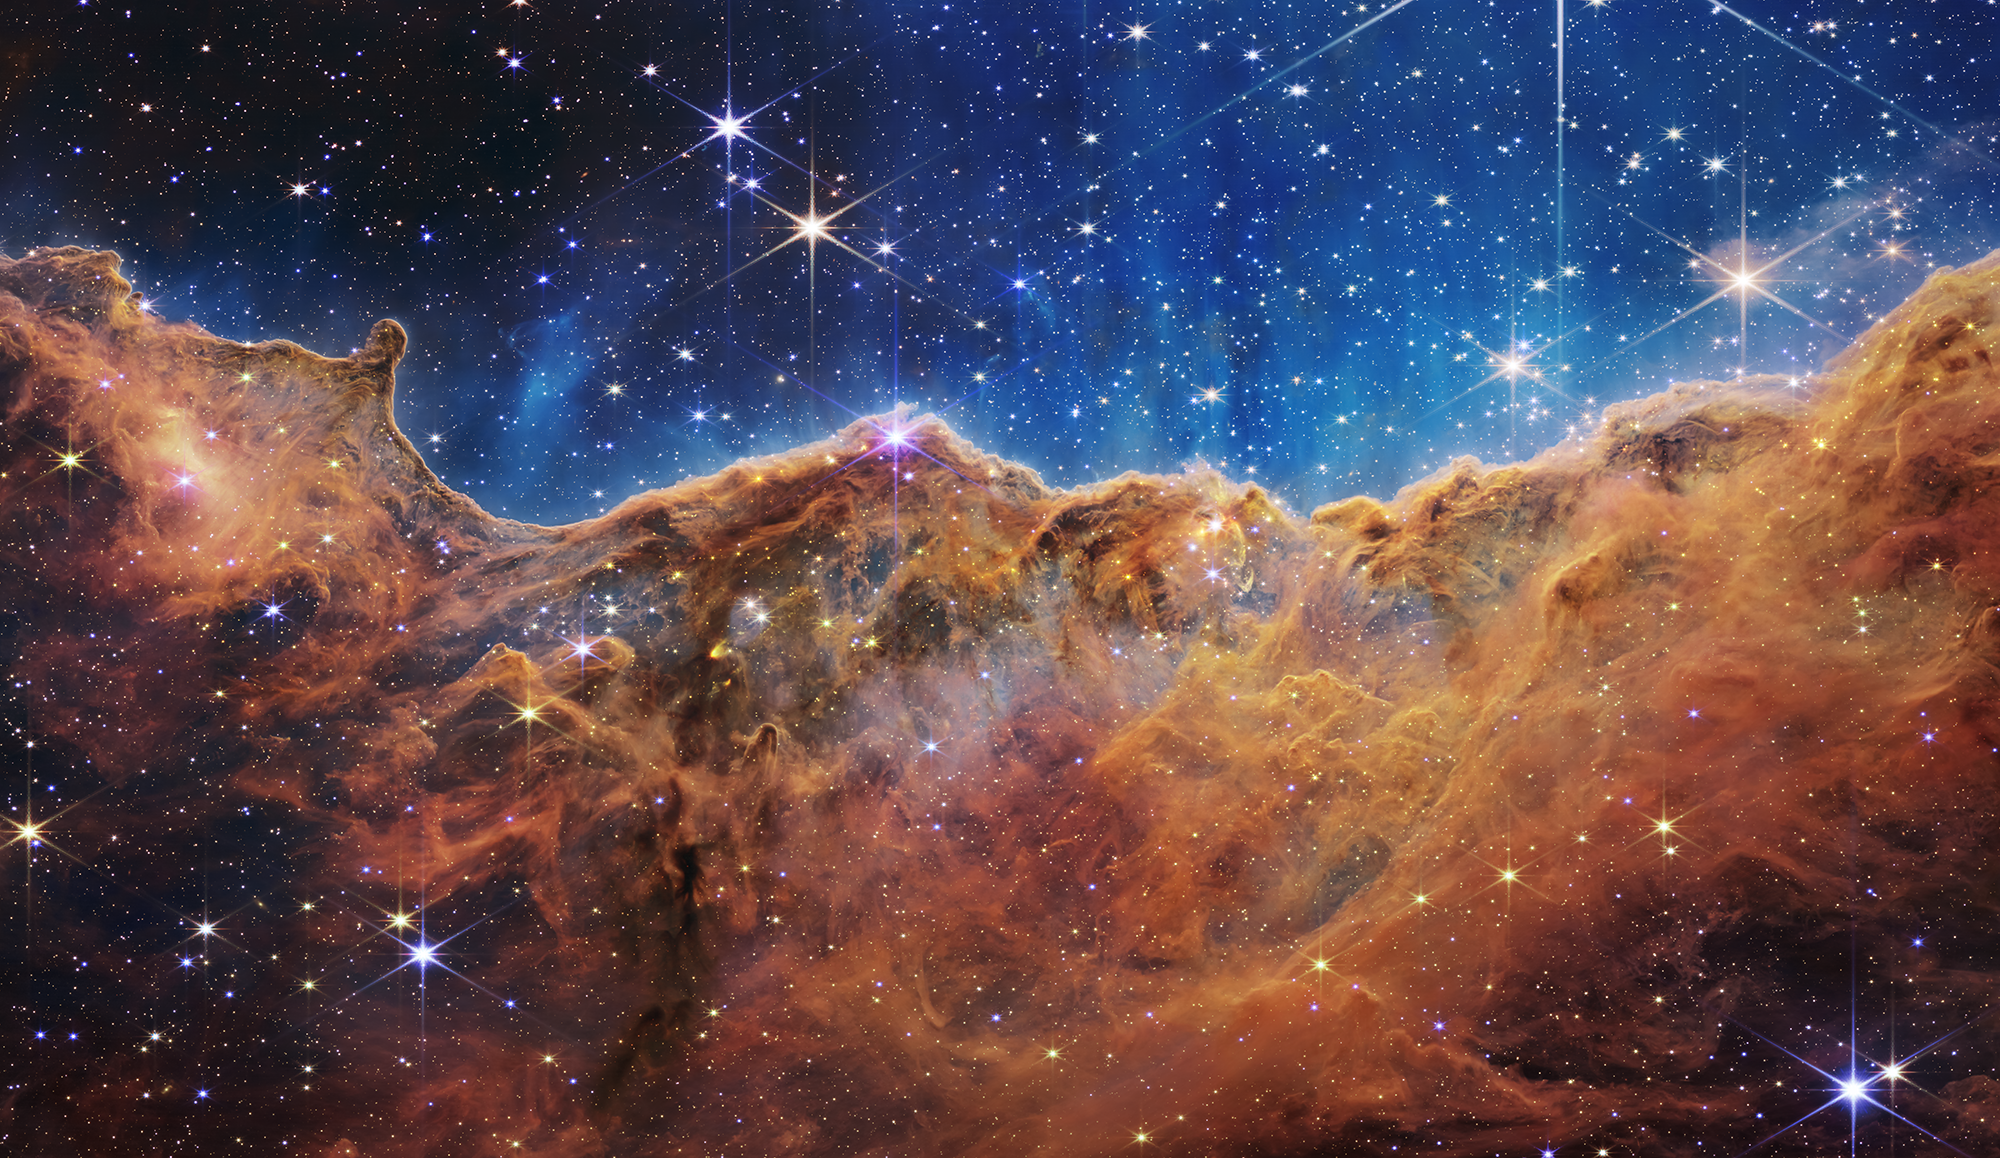 Karina Bulutsusu (Carina Nebula)